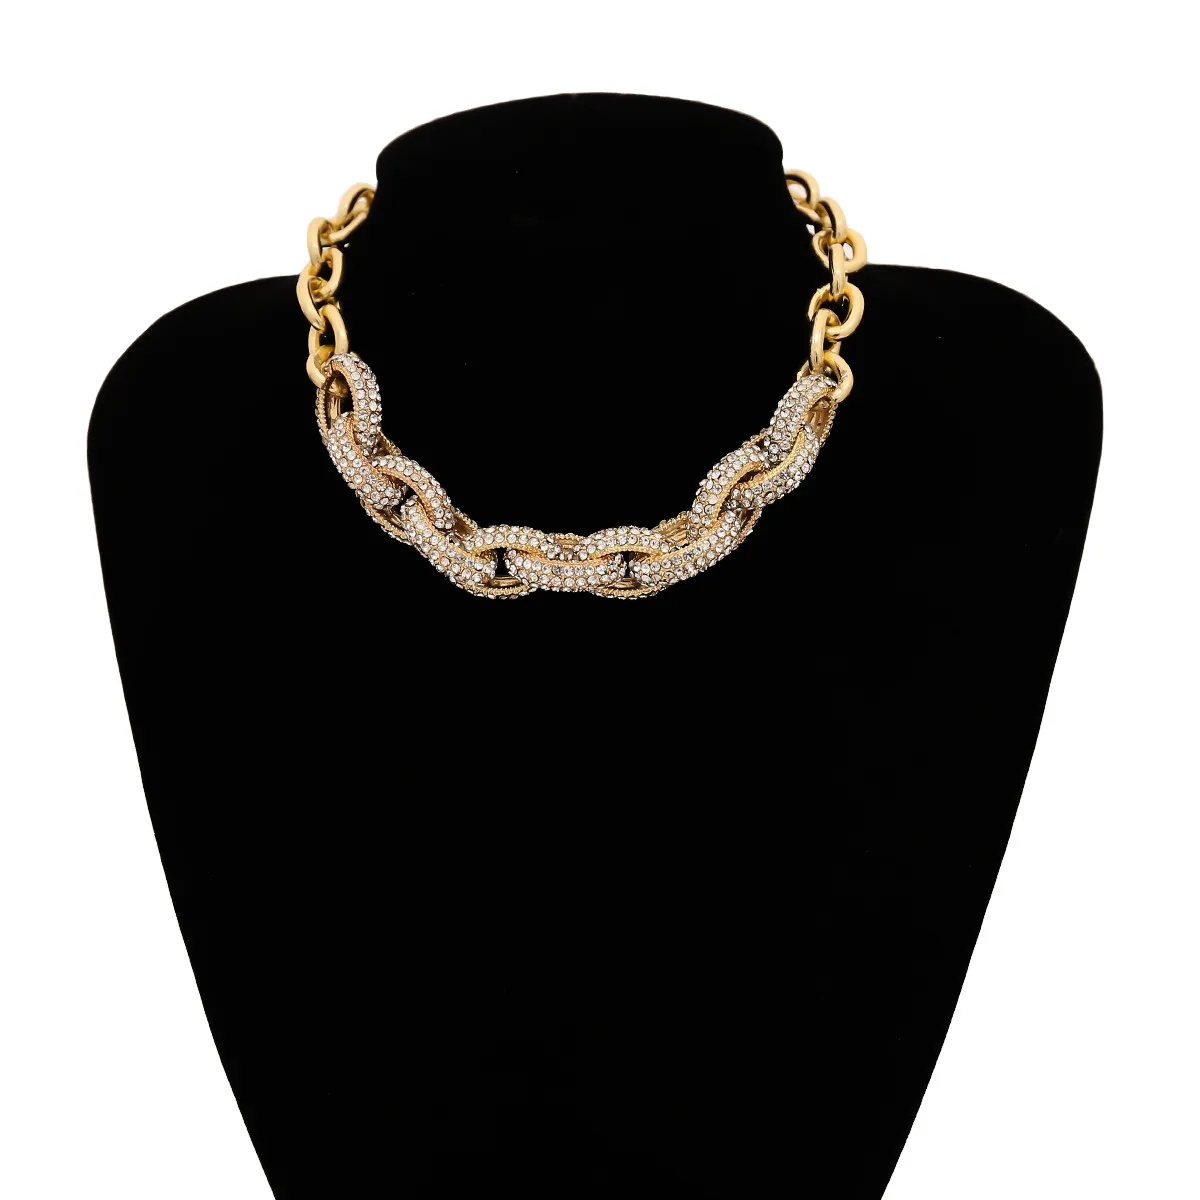 Popular fashion designer luxury sparkling exaggerated big chain rhinestone diamond choker statement necklace for woman girls punk style